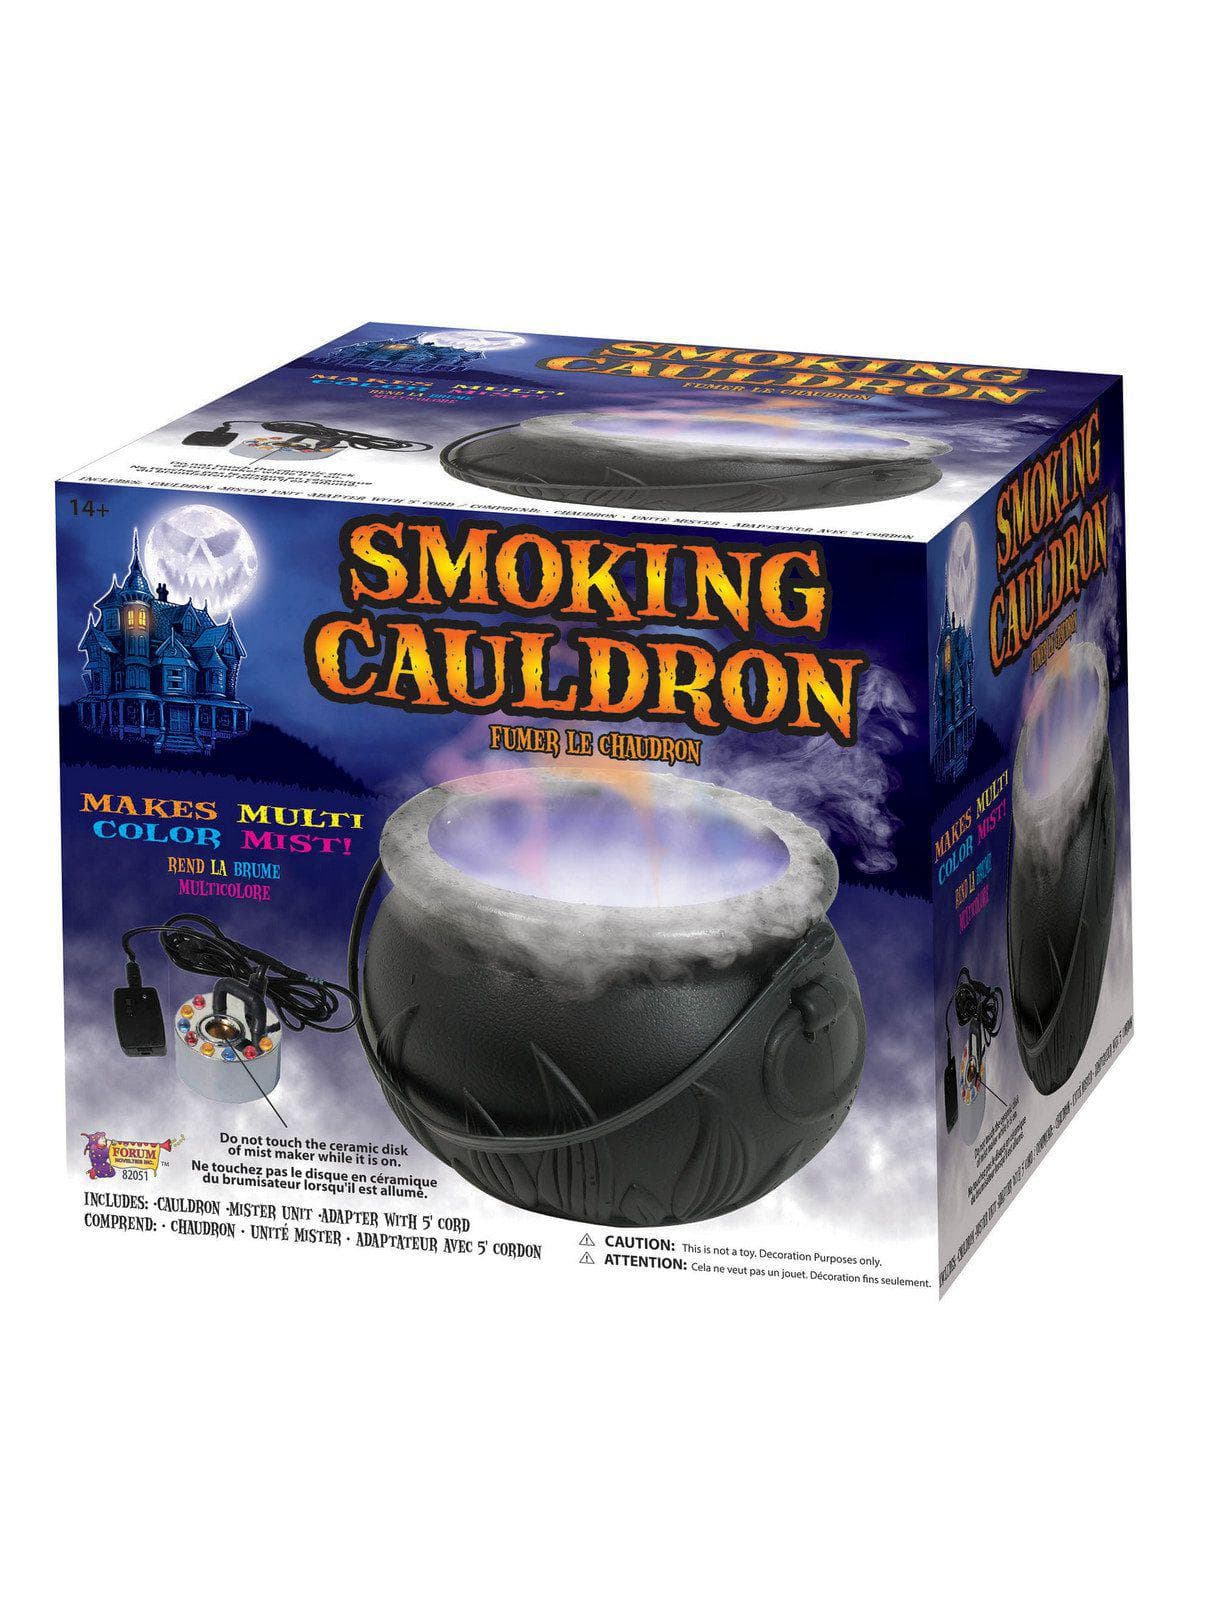 Black Smoking Cauldron - costumes.com